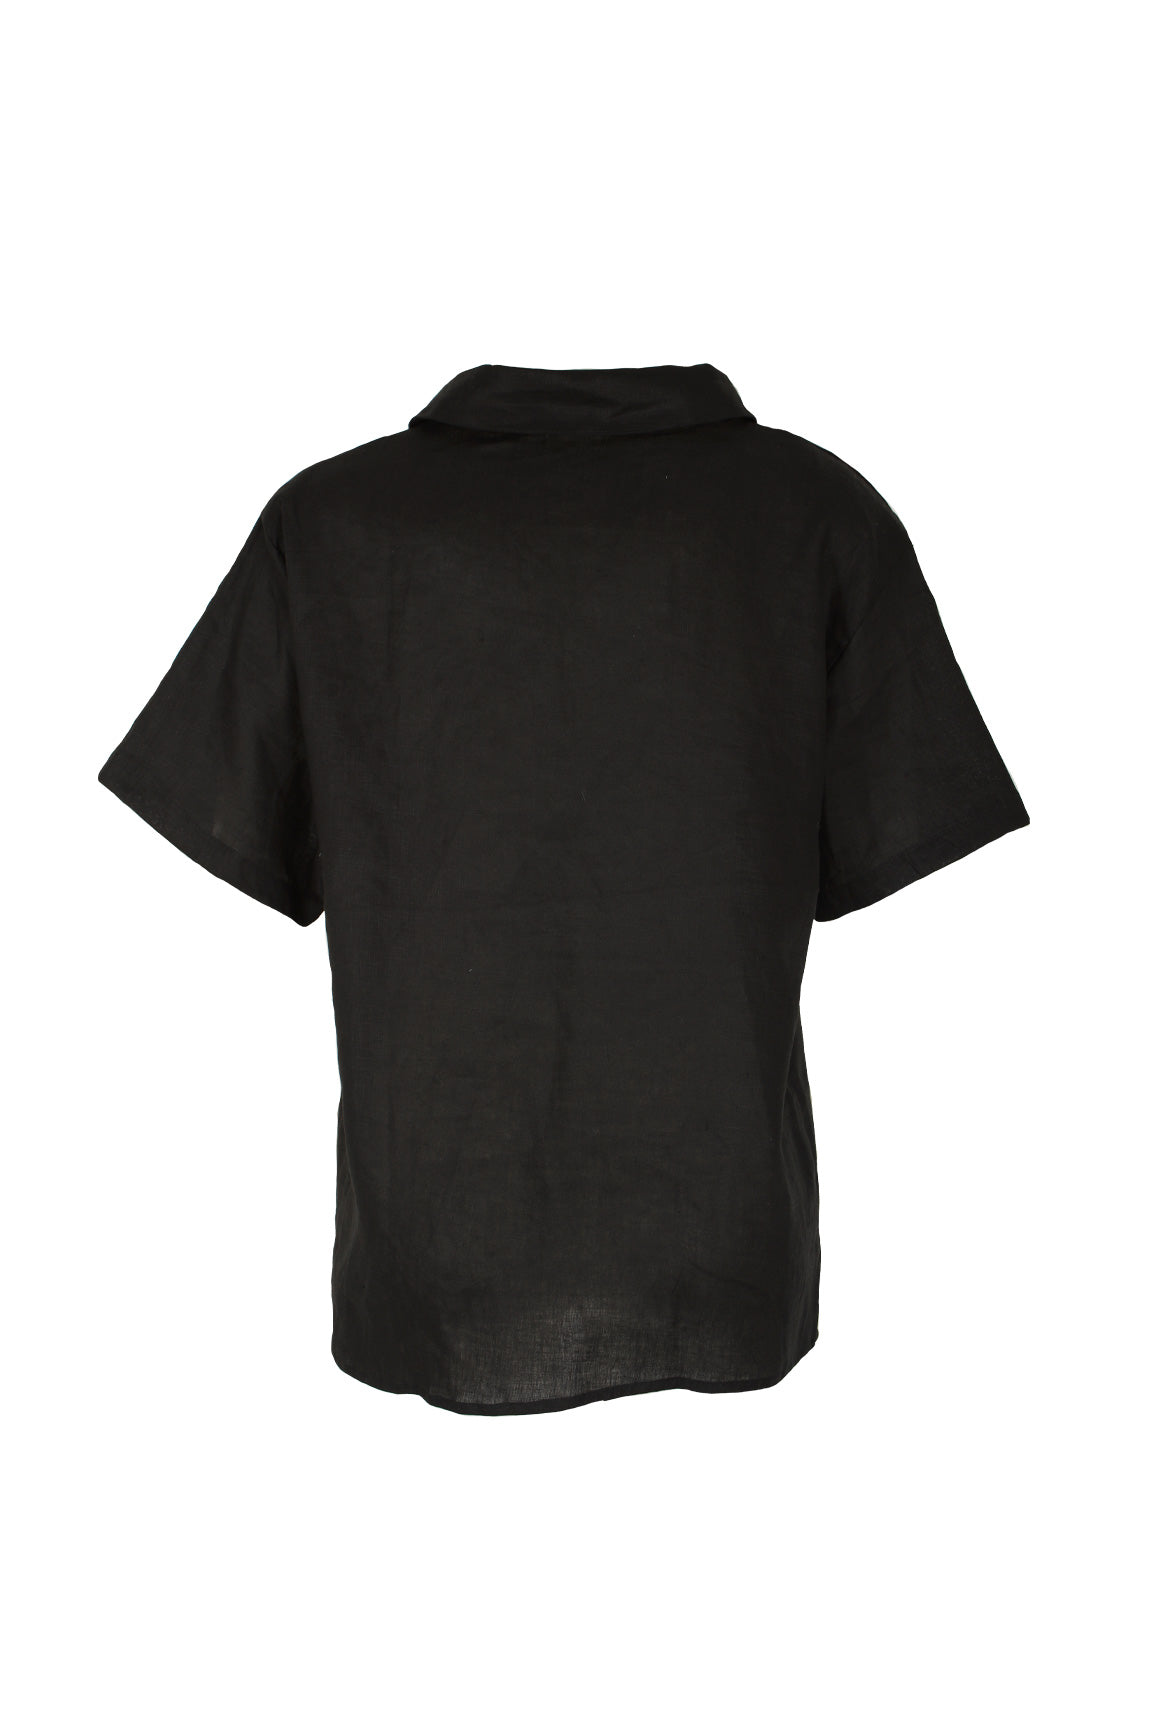 The Aesthetic Icon Black Maxi Shirt